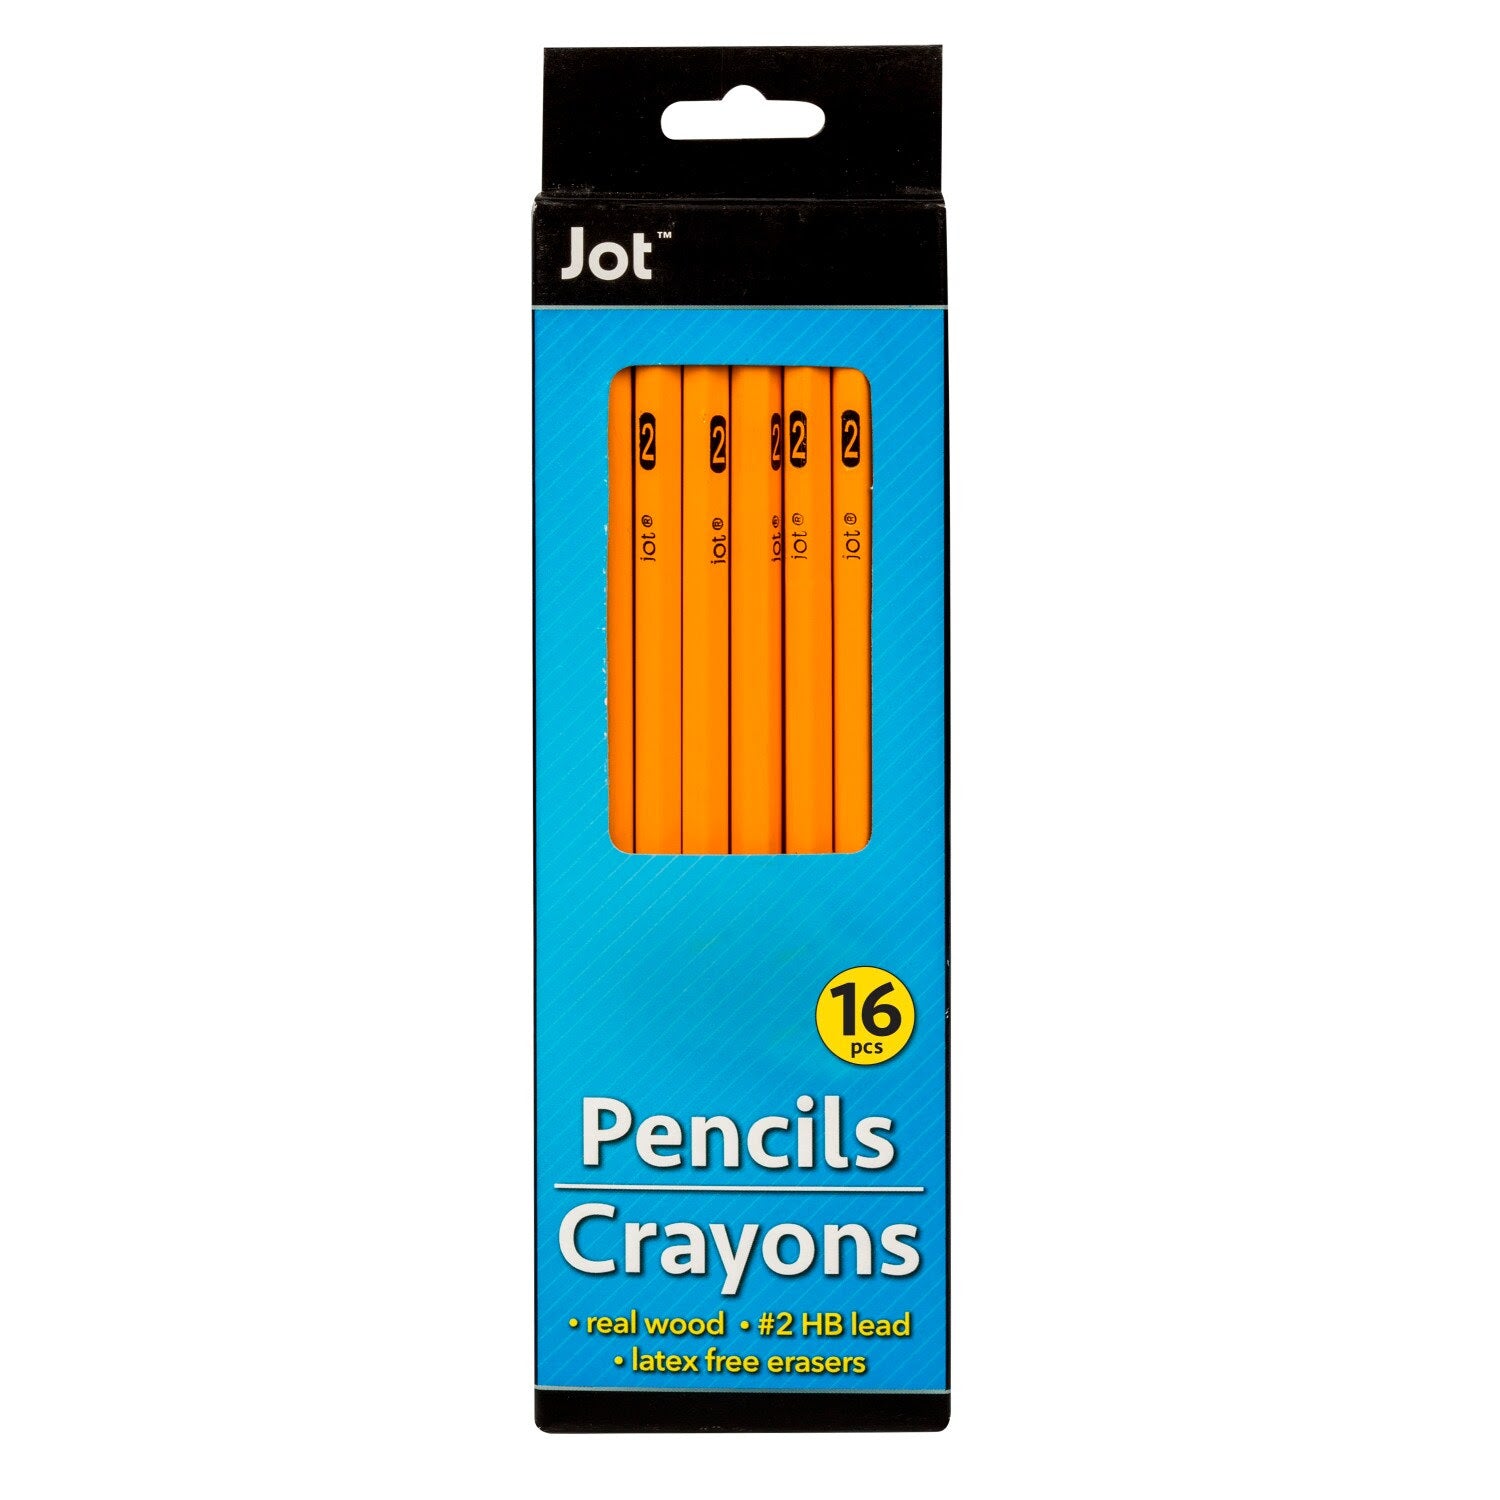 Pencils (10/pack)